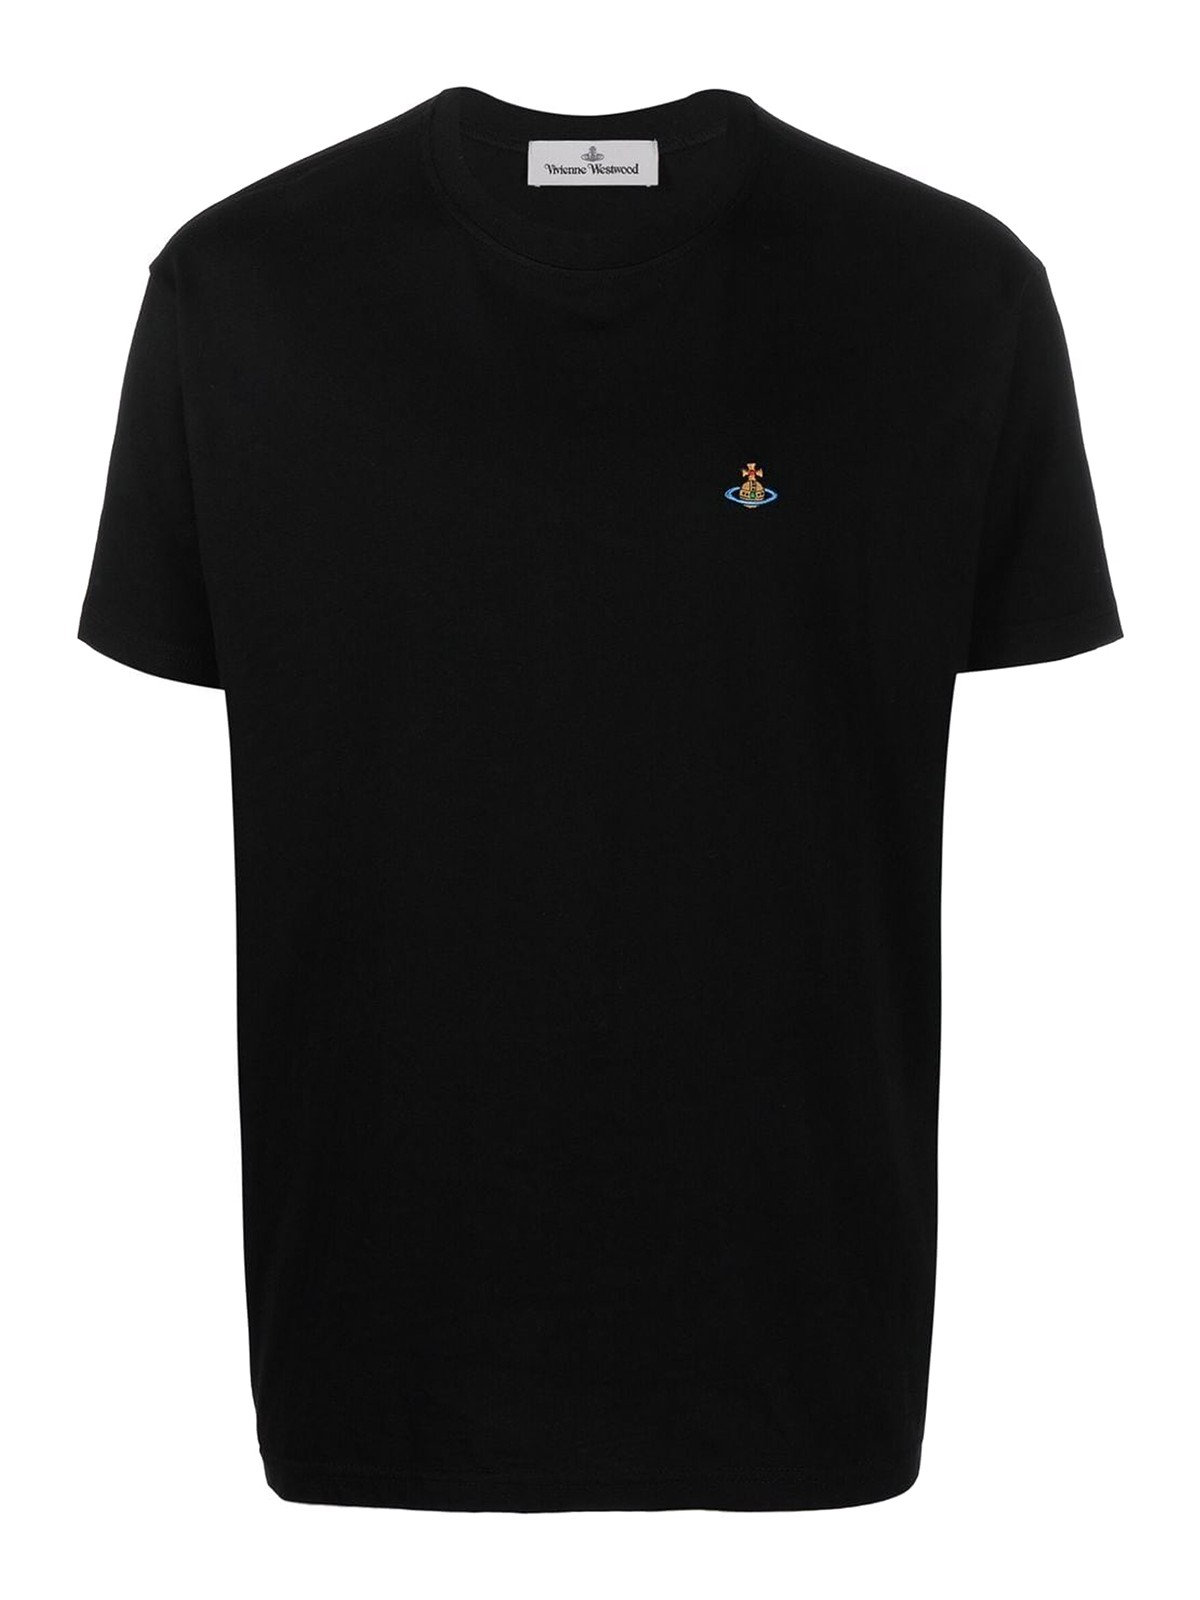 Tシャツ Vivienne Westwood - Tシャツ - 黒 - 3G010006J001MGON401